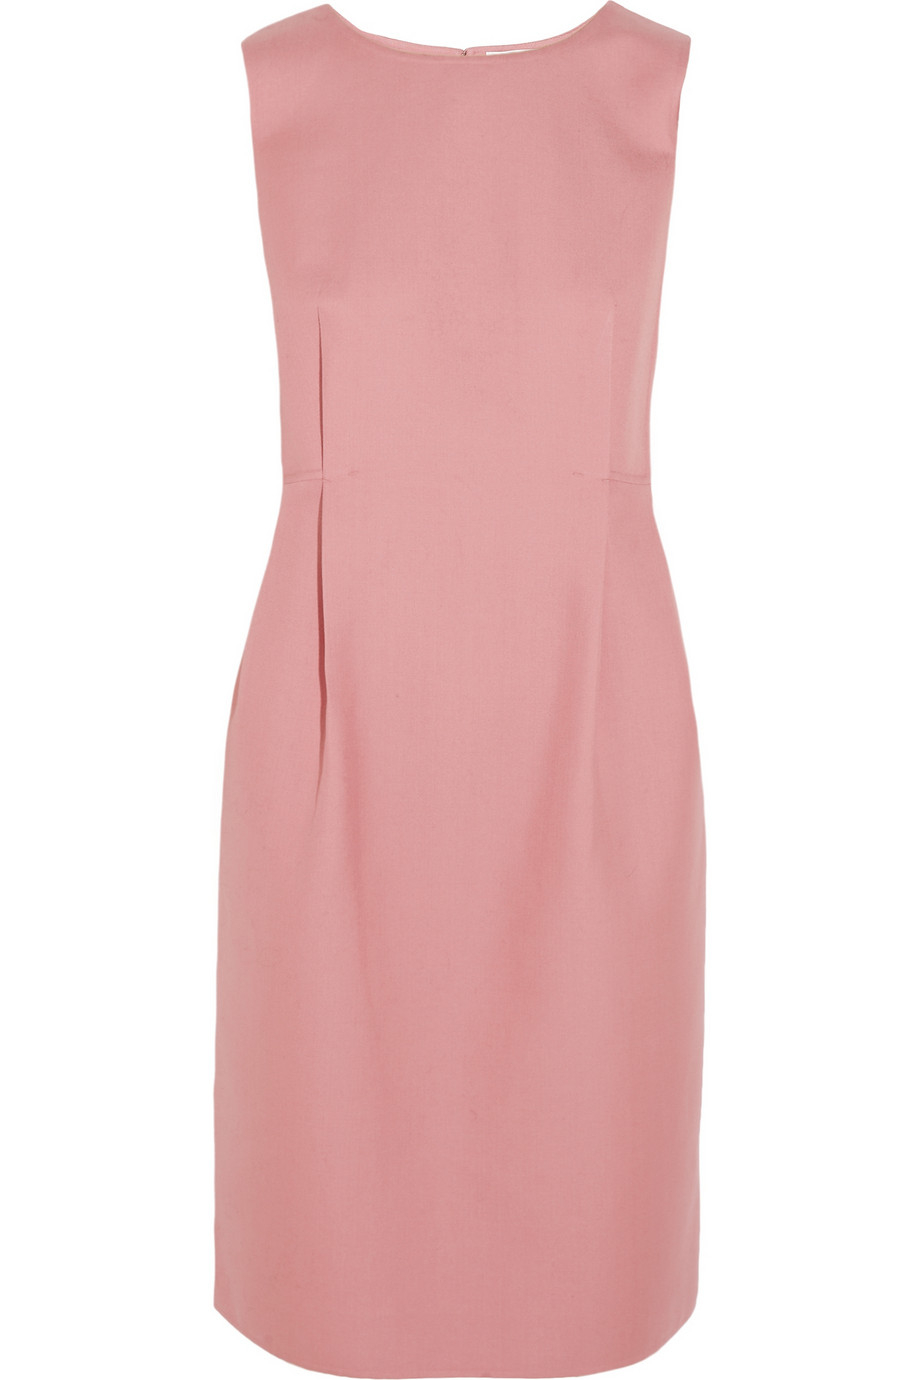 Lyst - Jil Sander Cotton-gabardine Dress in Pink